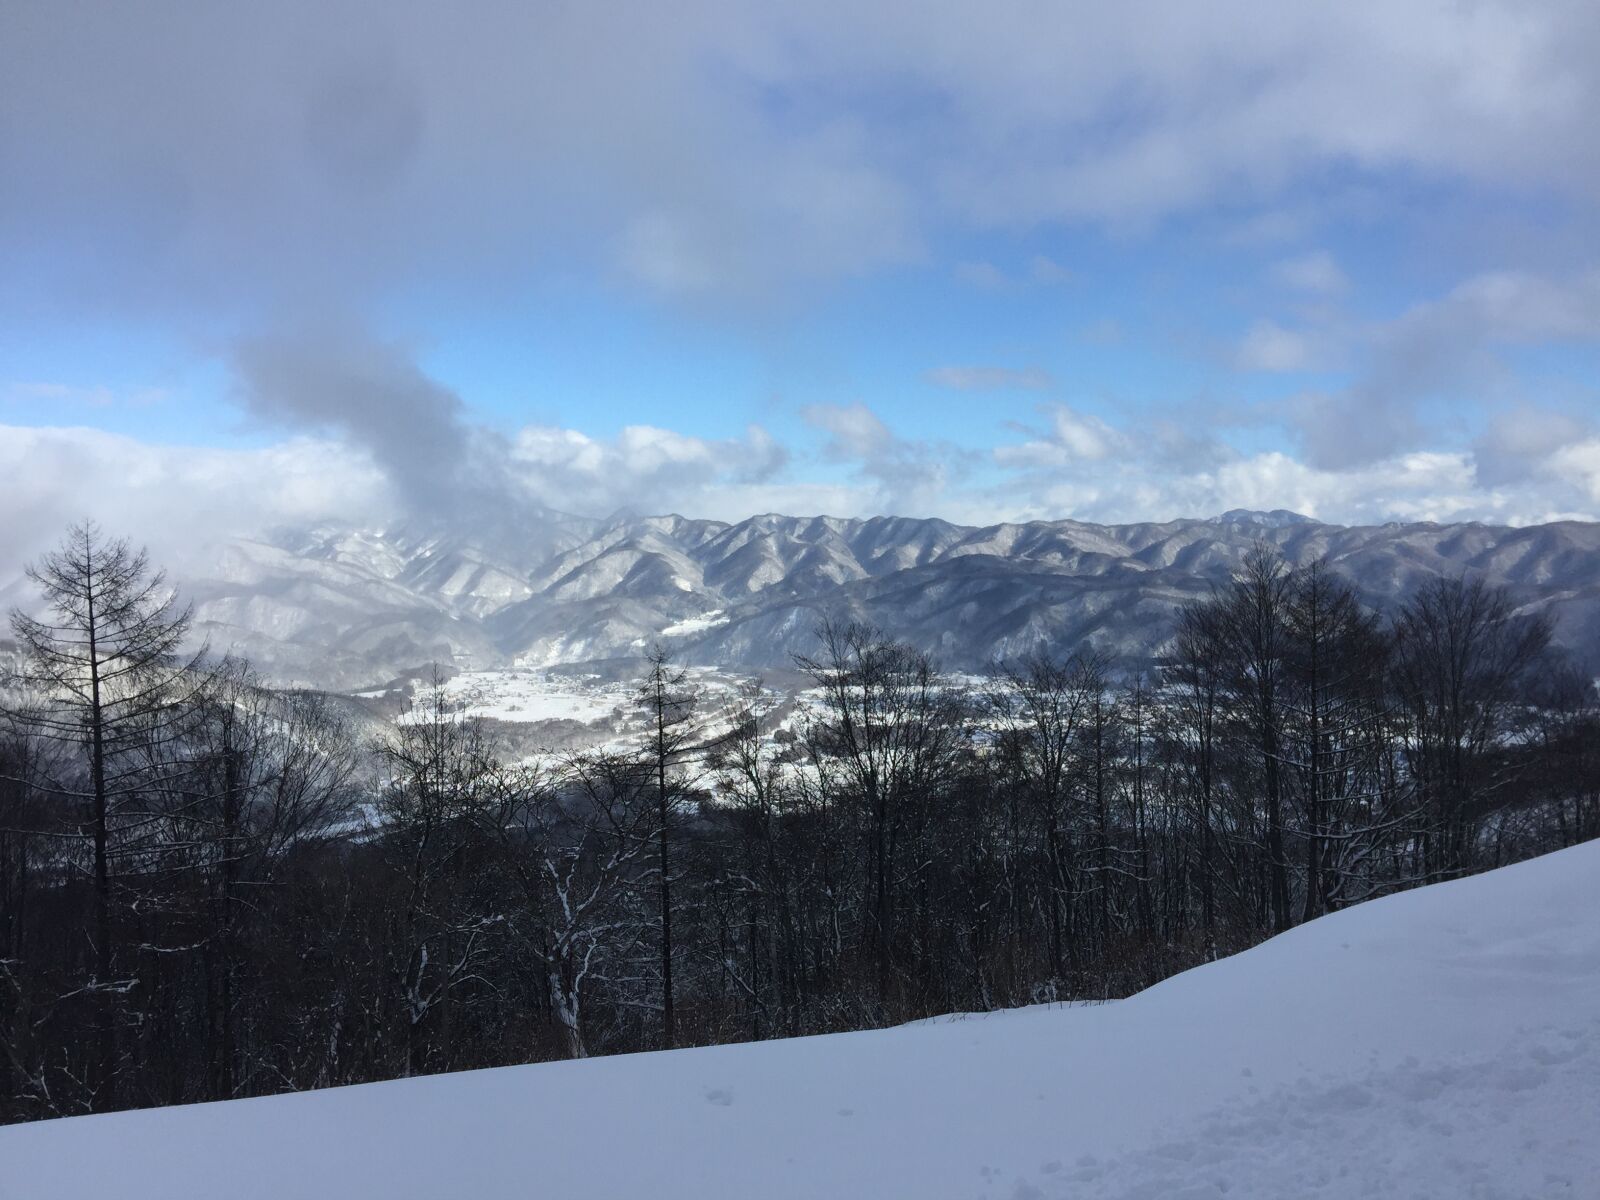 iPhone 6 Plus back camera 4.15mm f/2.2 sample photo. Ski resort, snow, winter photography